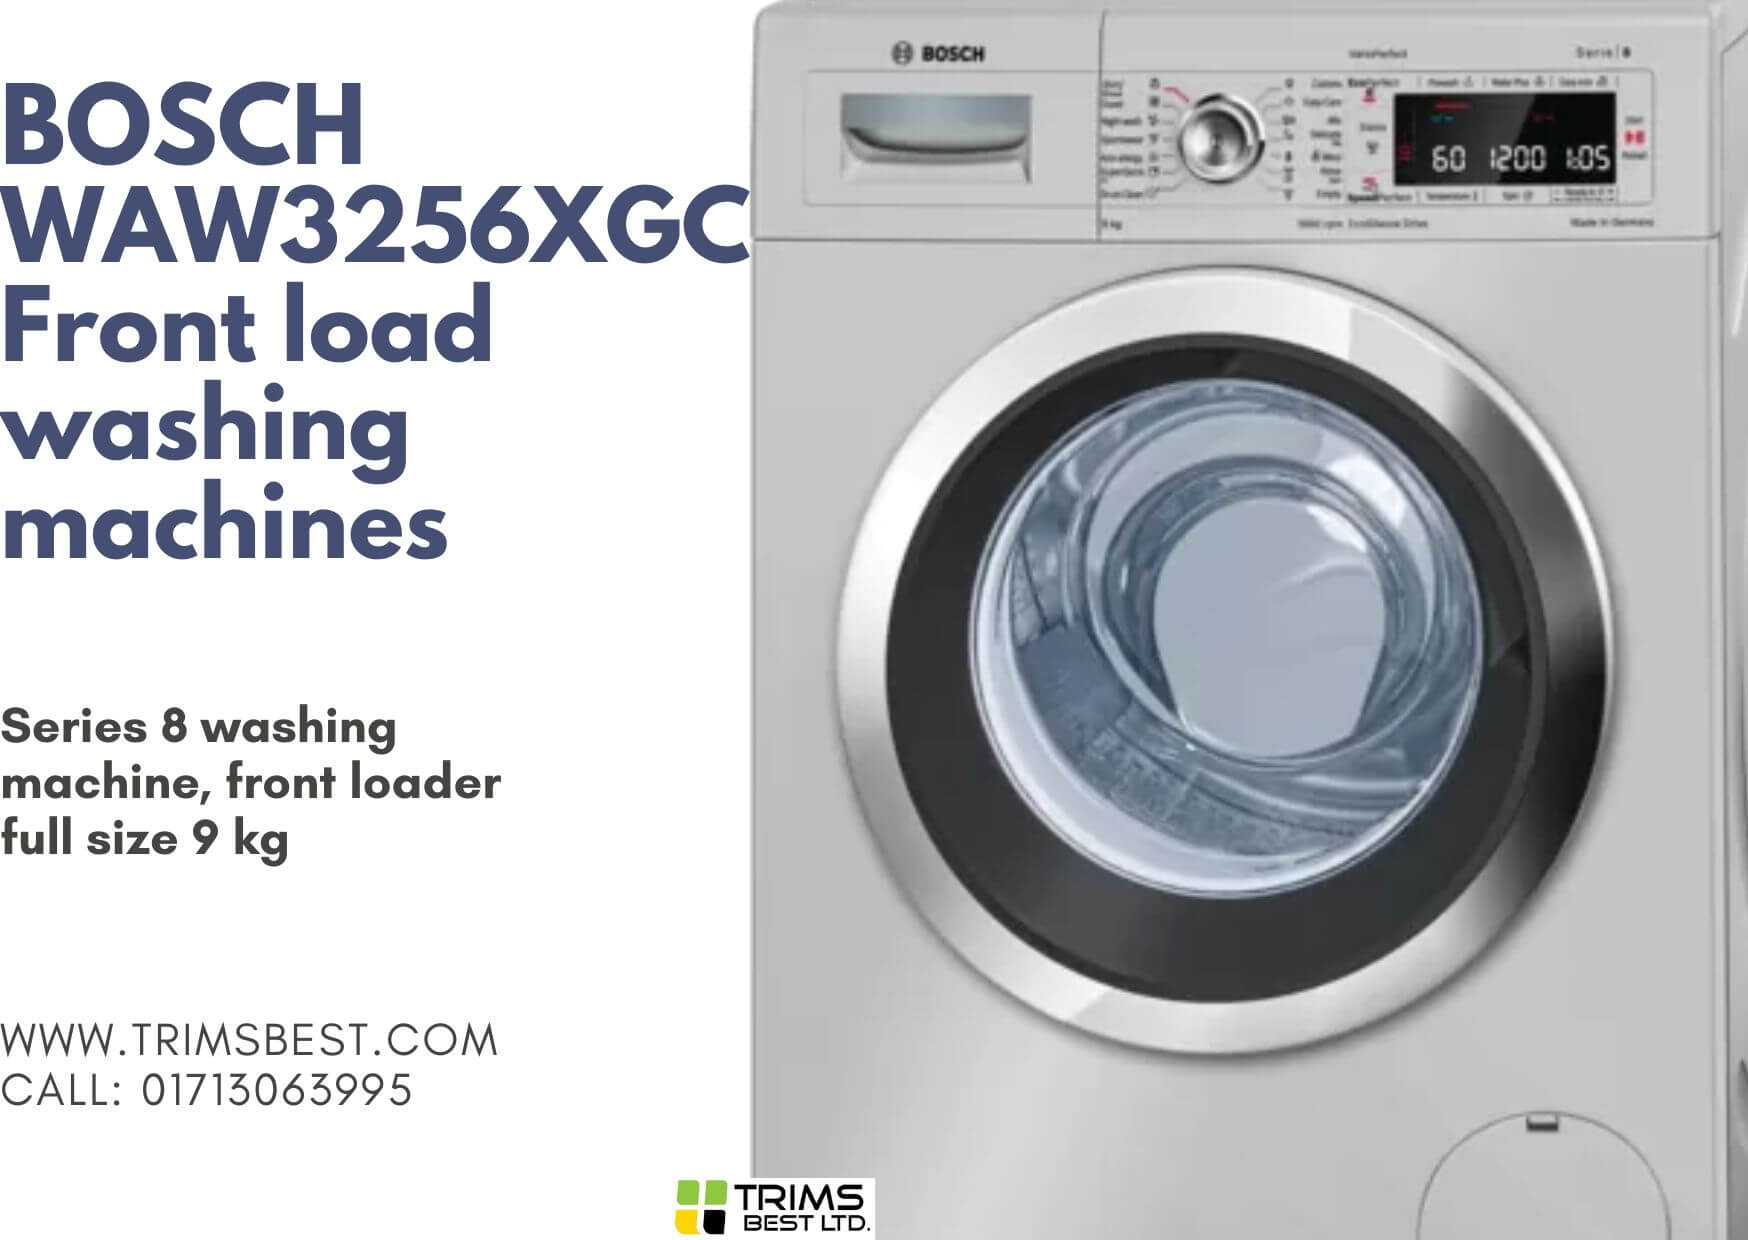 BOSCH
WAW3256XGC
Front load washing machines